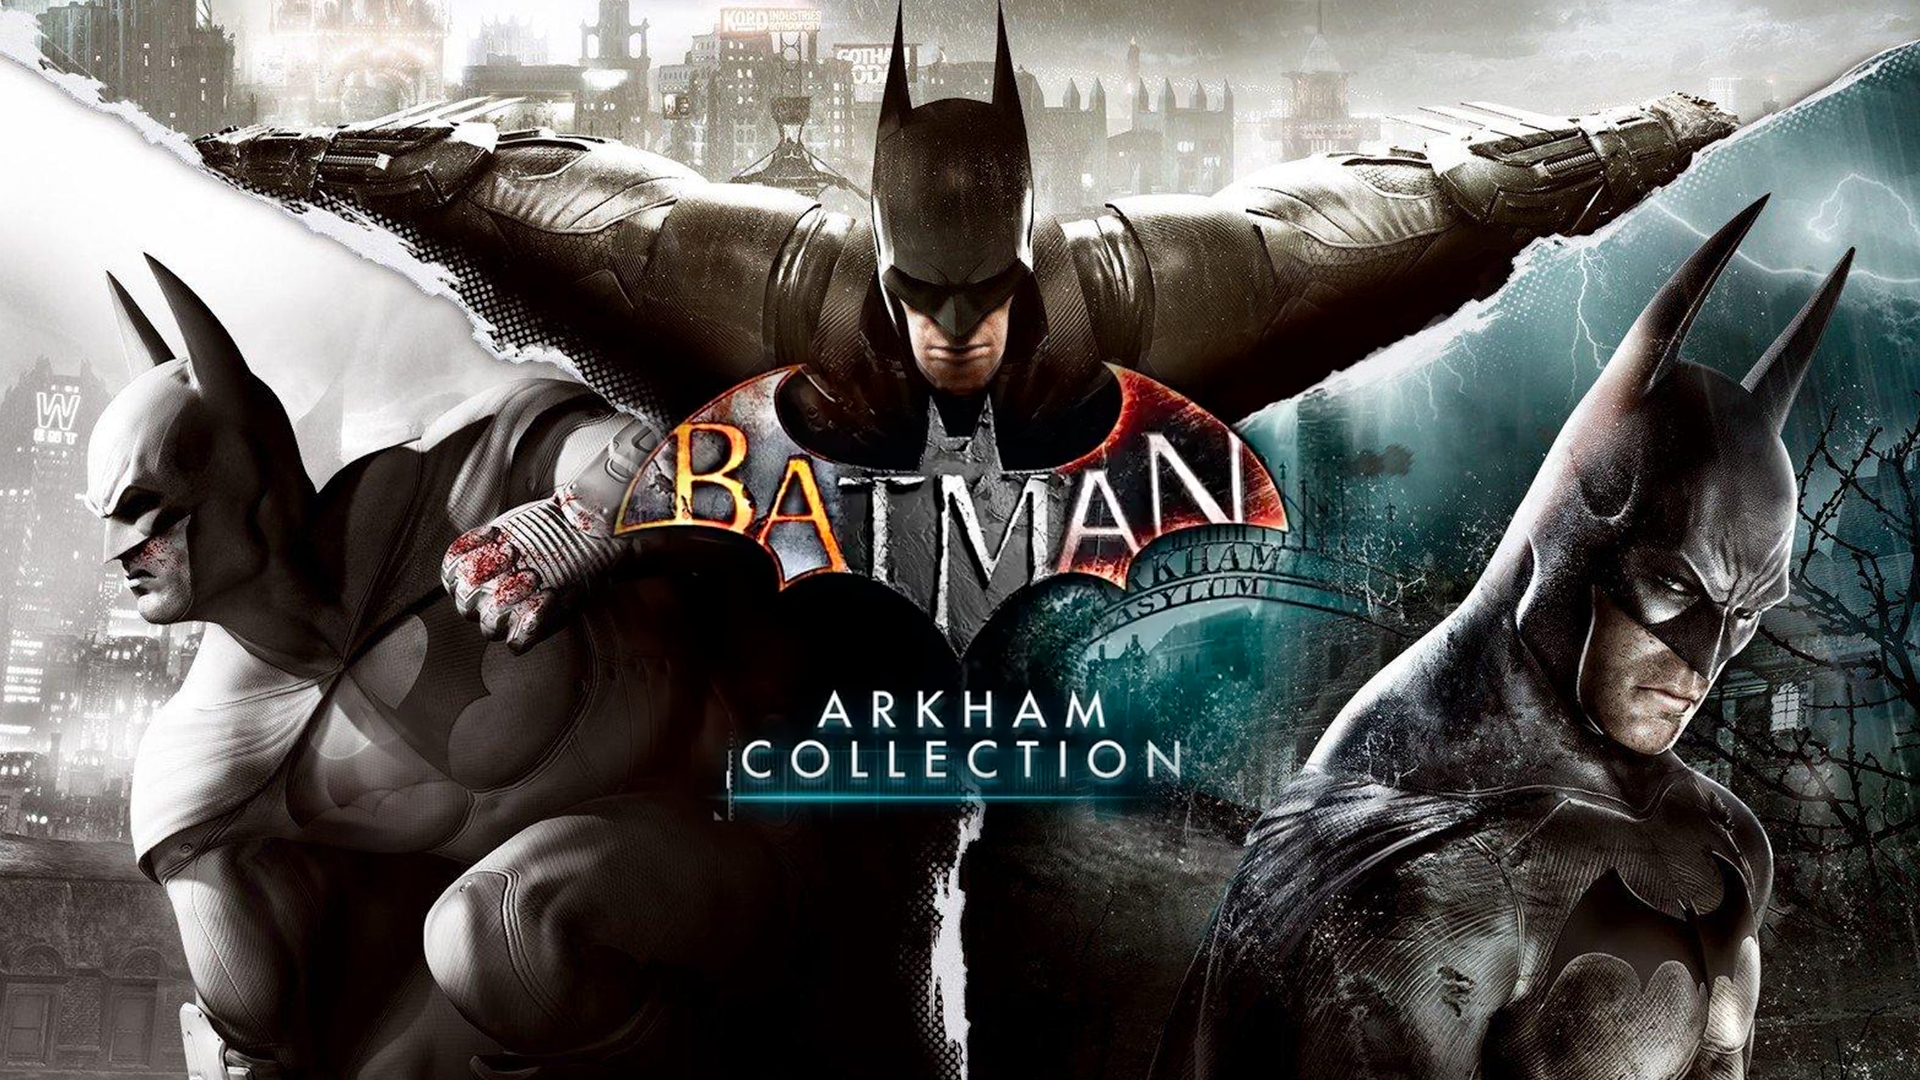 Batman arkham collection pc download pnb rock selfish download